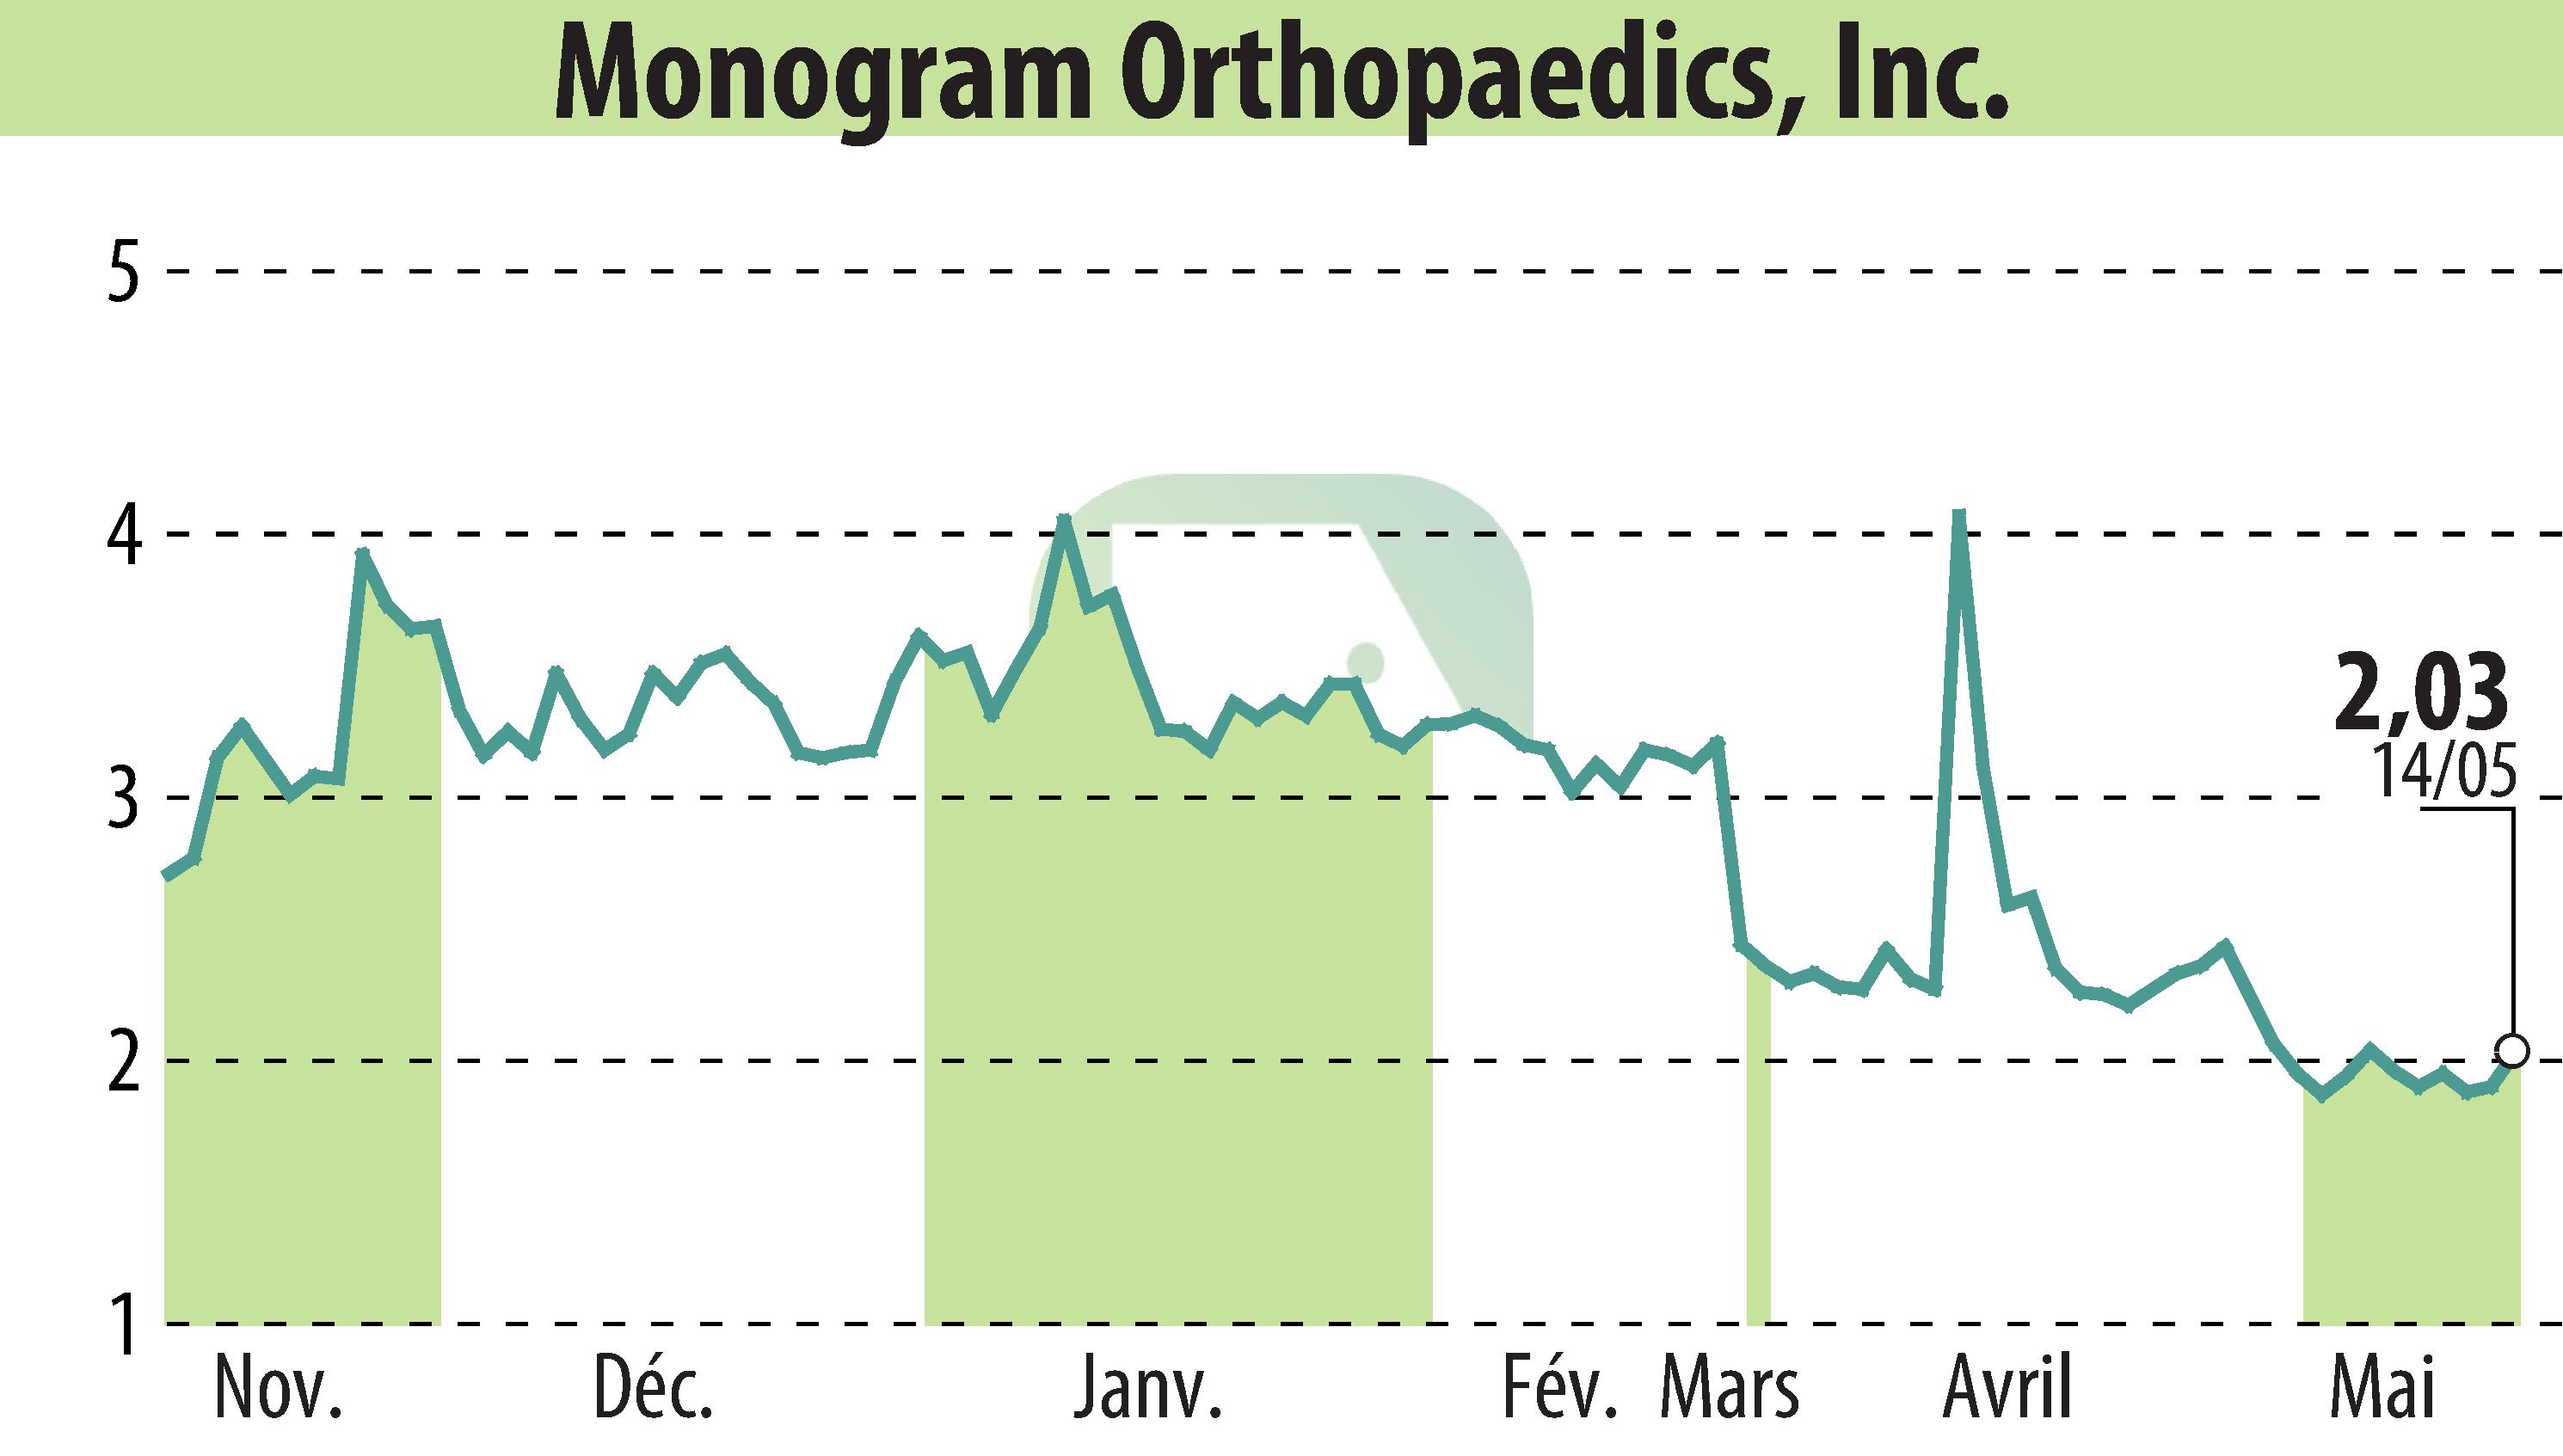 Stock price chart of MONOGRAM ORTHOPAEDICS INC (EBR:MGRM) showing fluctuations.